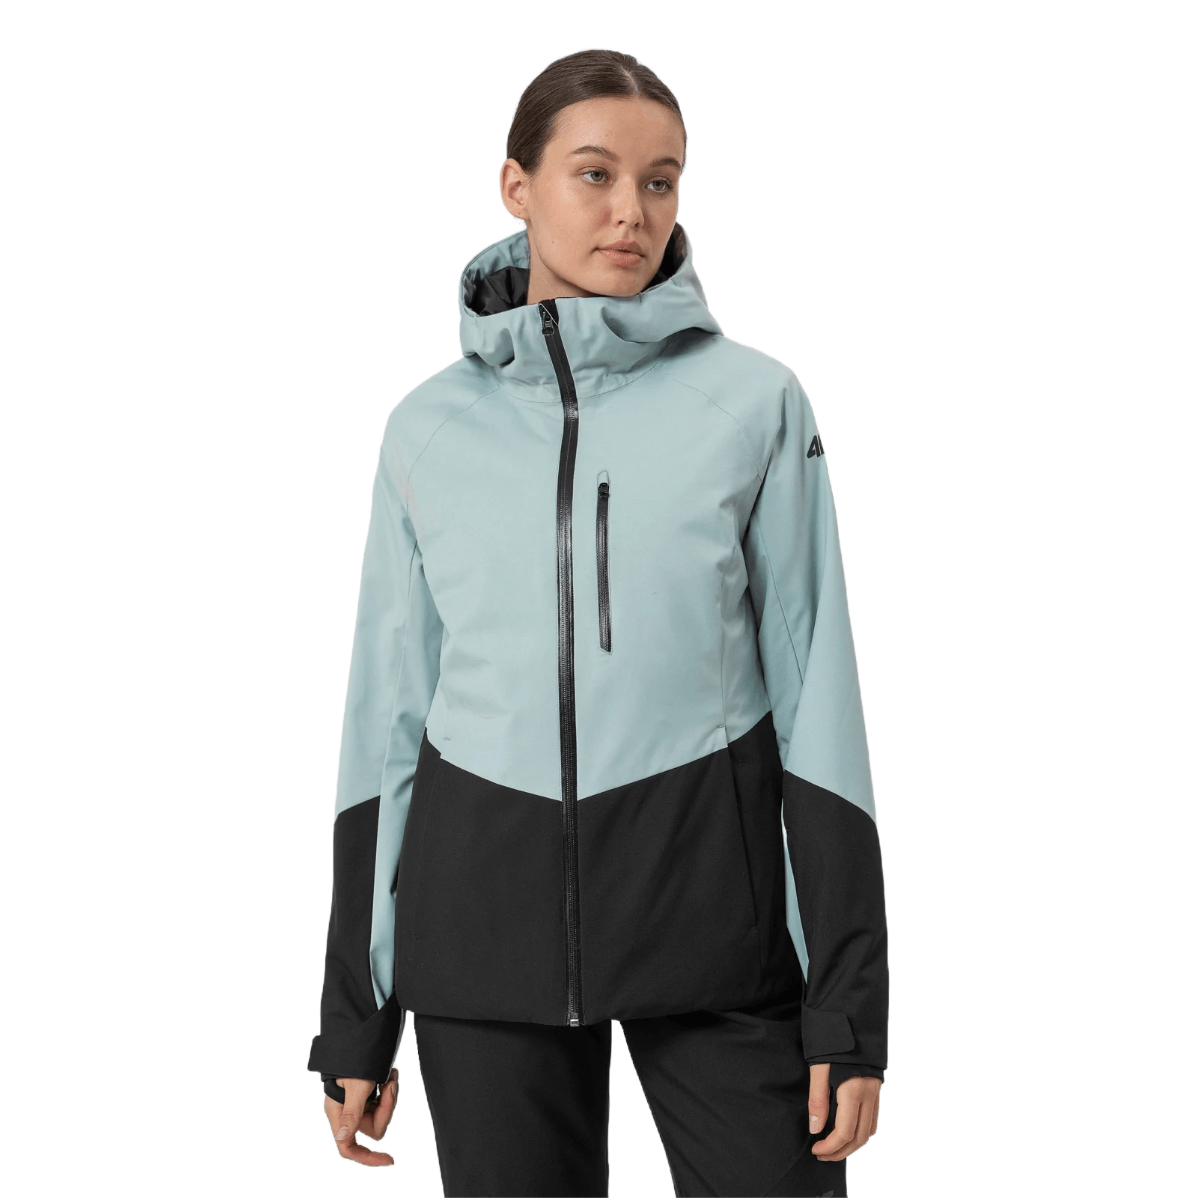 Women's HQ Performance ski jacket membrane 15 000